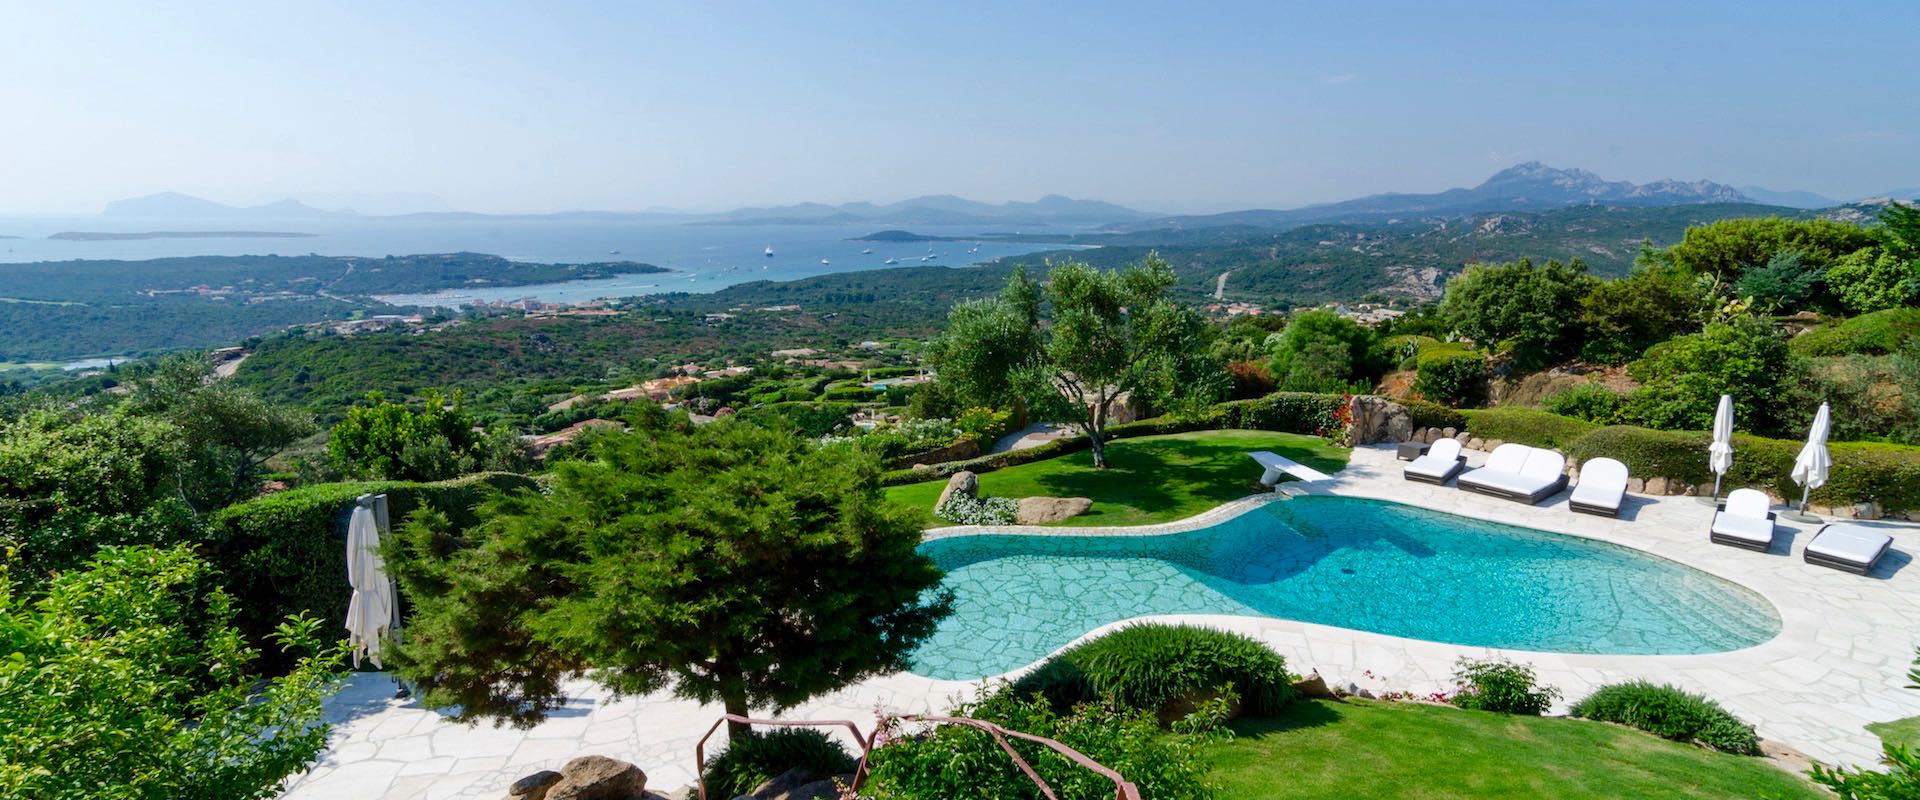 Sardinia view from Villa Sealight swimming pool